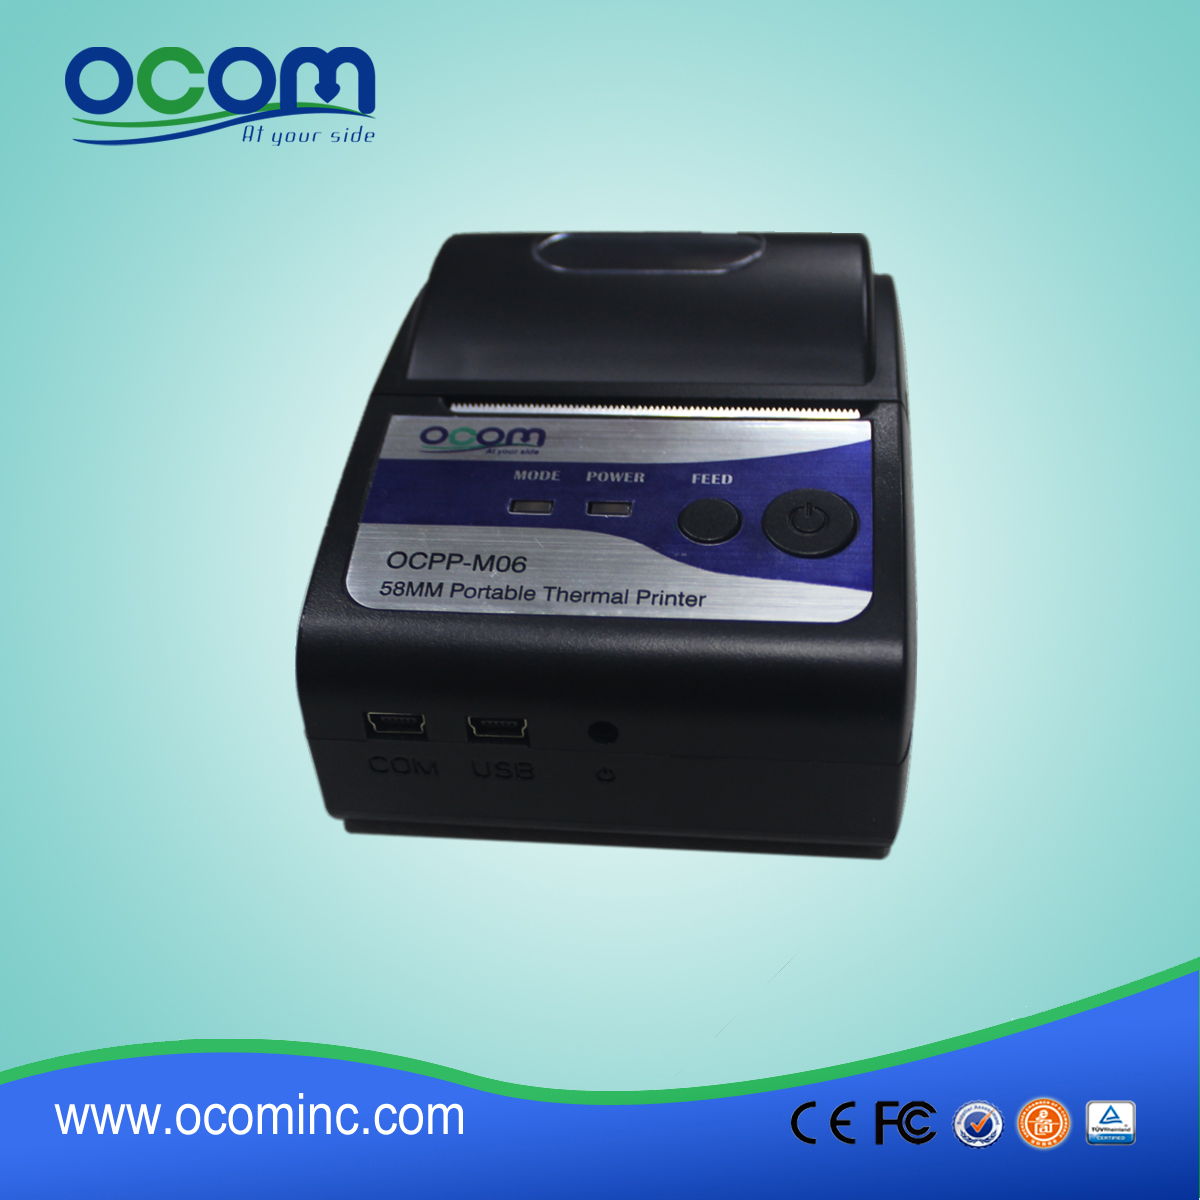 Ocpp-M06 China Mini USB Thermal Printer Manufacturer